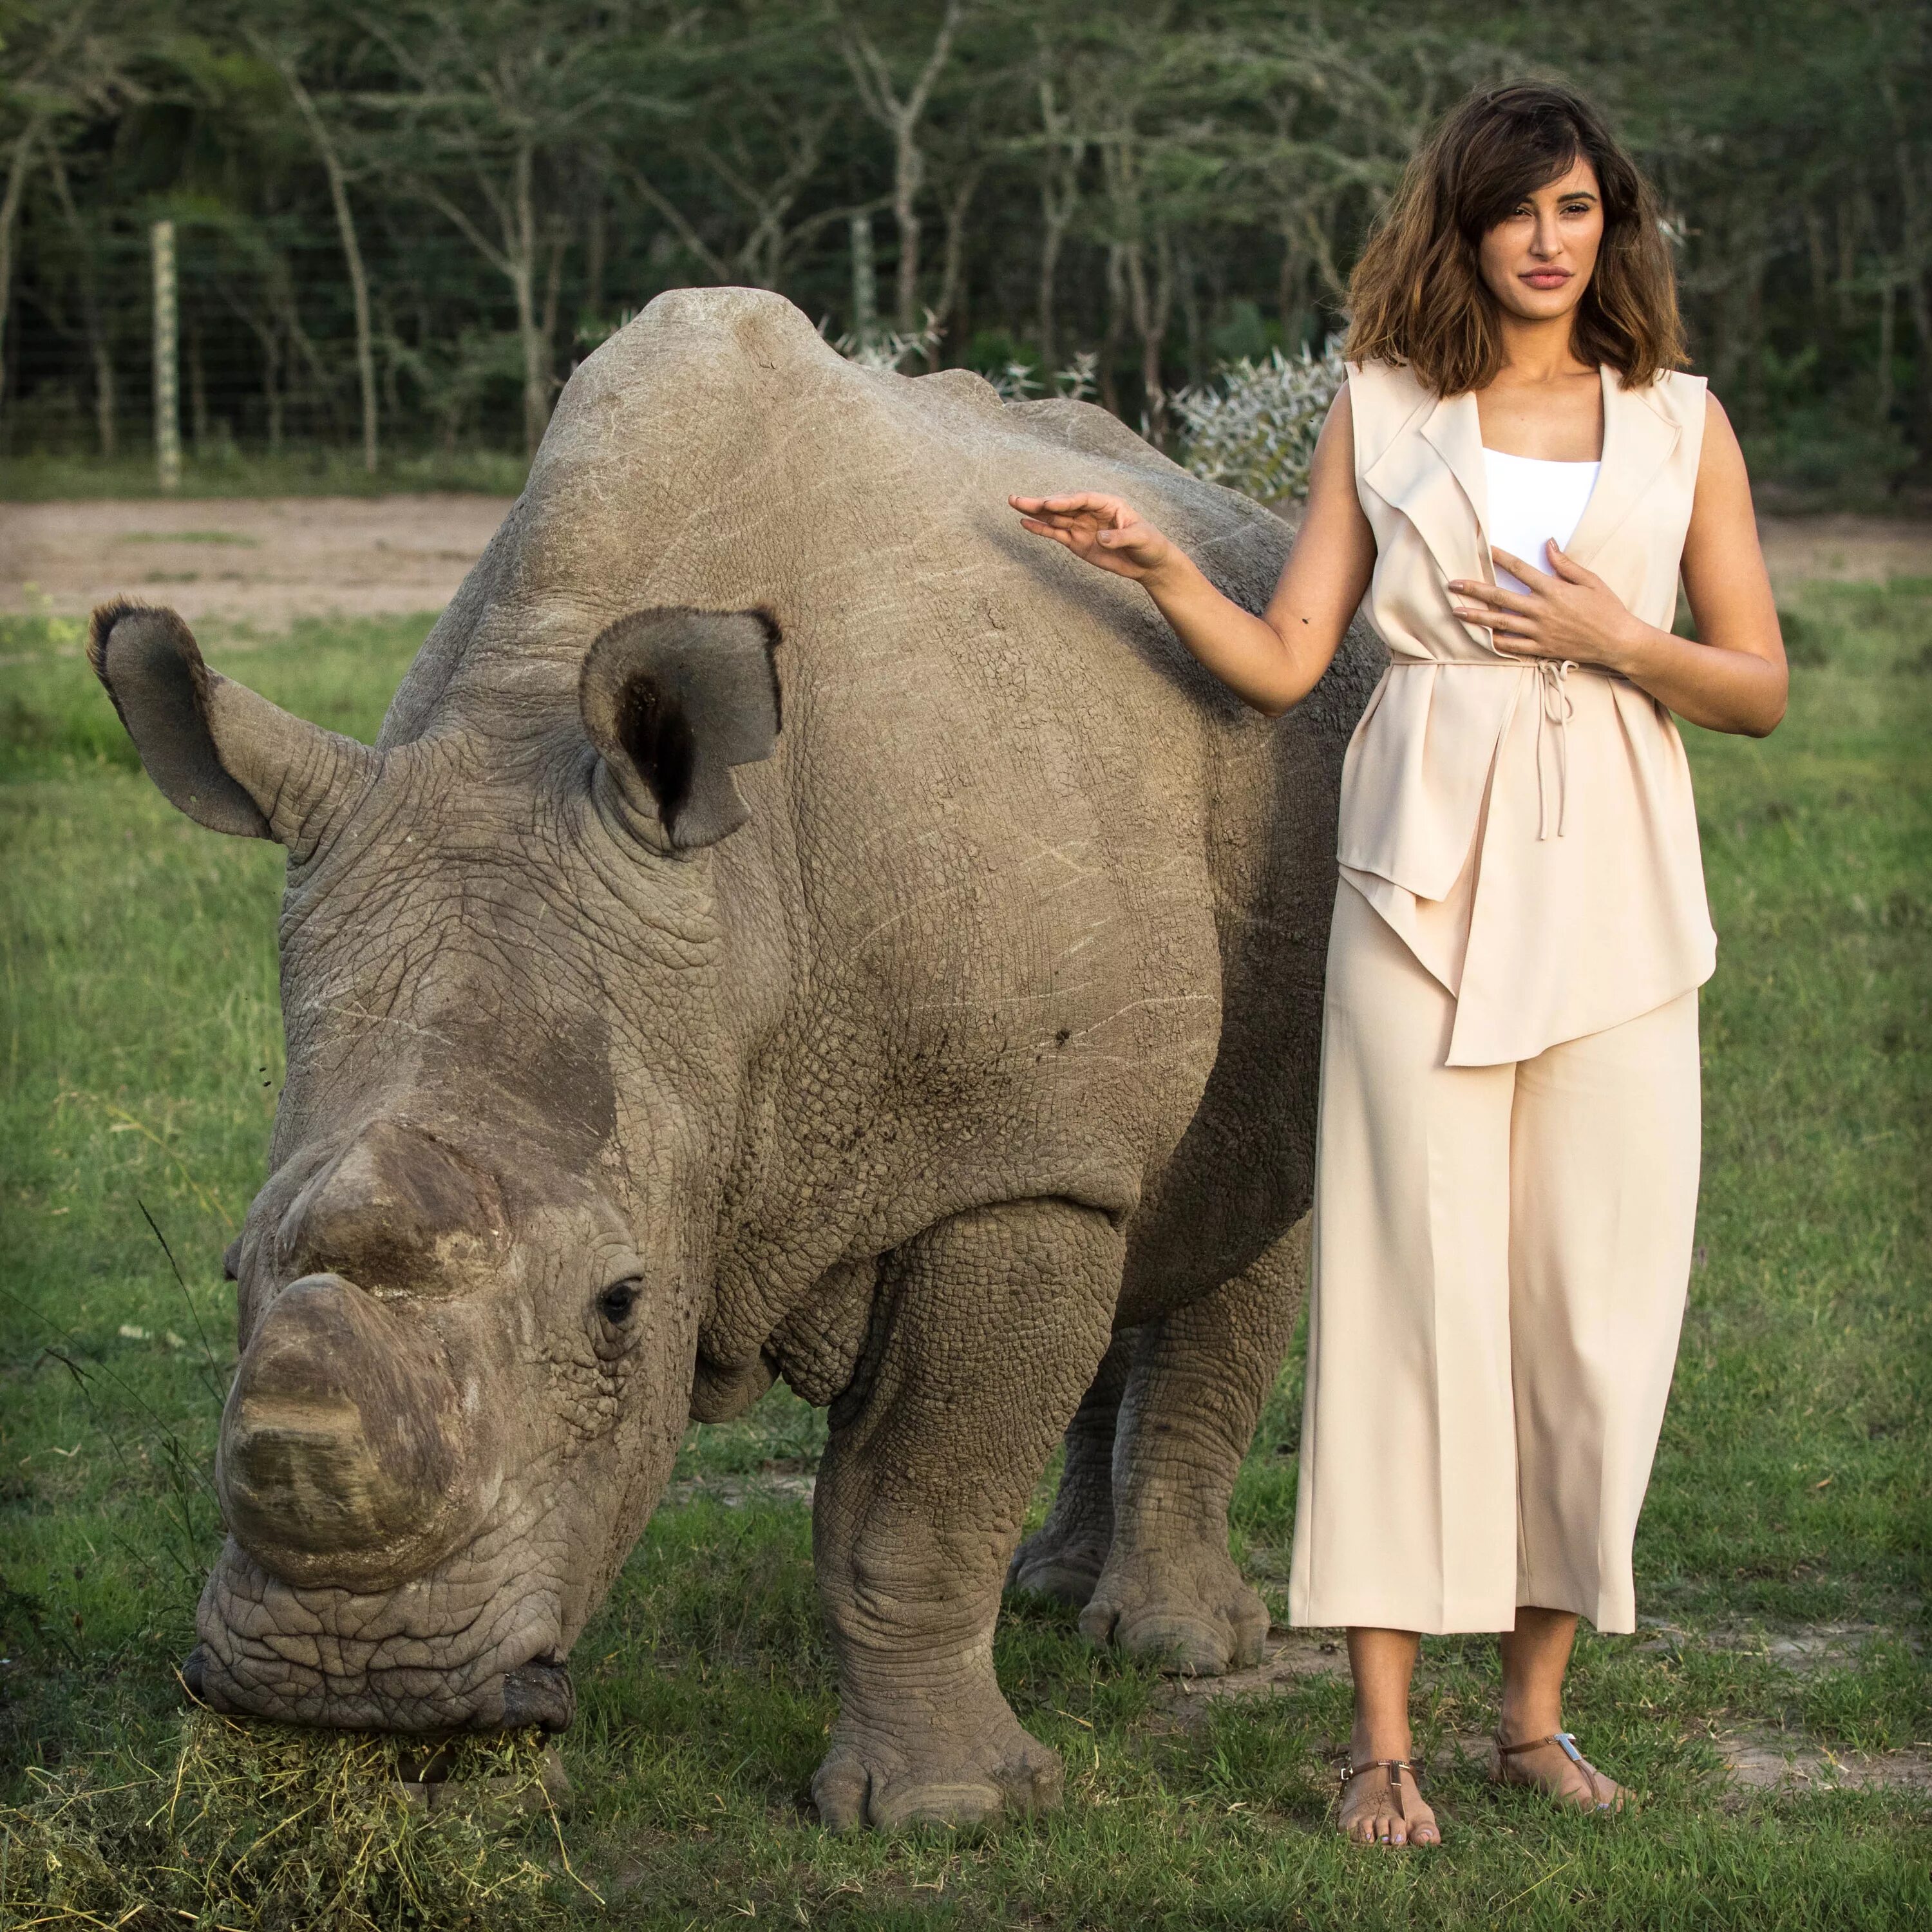 2015 05. Судан (носорог). Белый носорог. Девушка и носорог. Самый большой носорог.